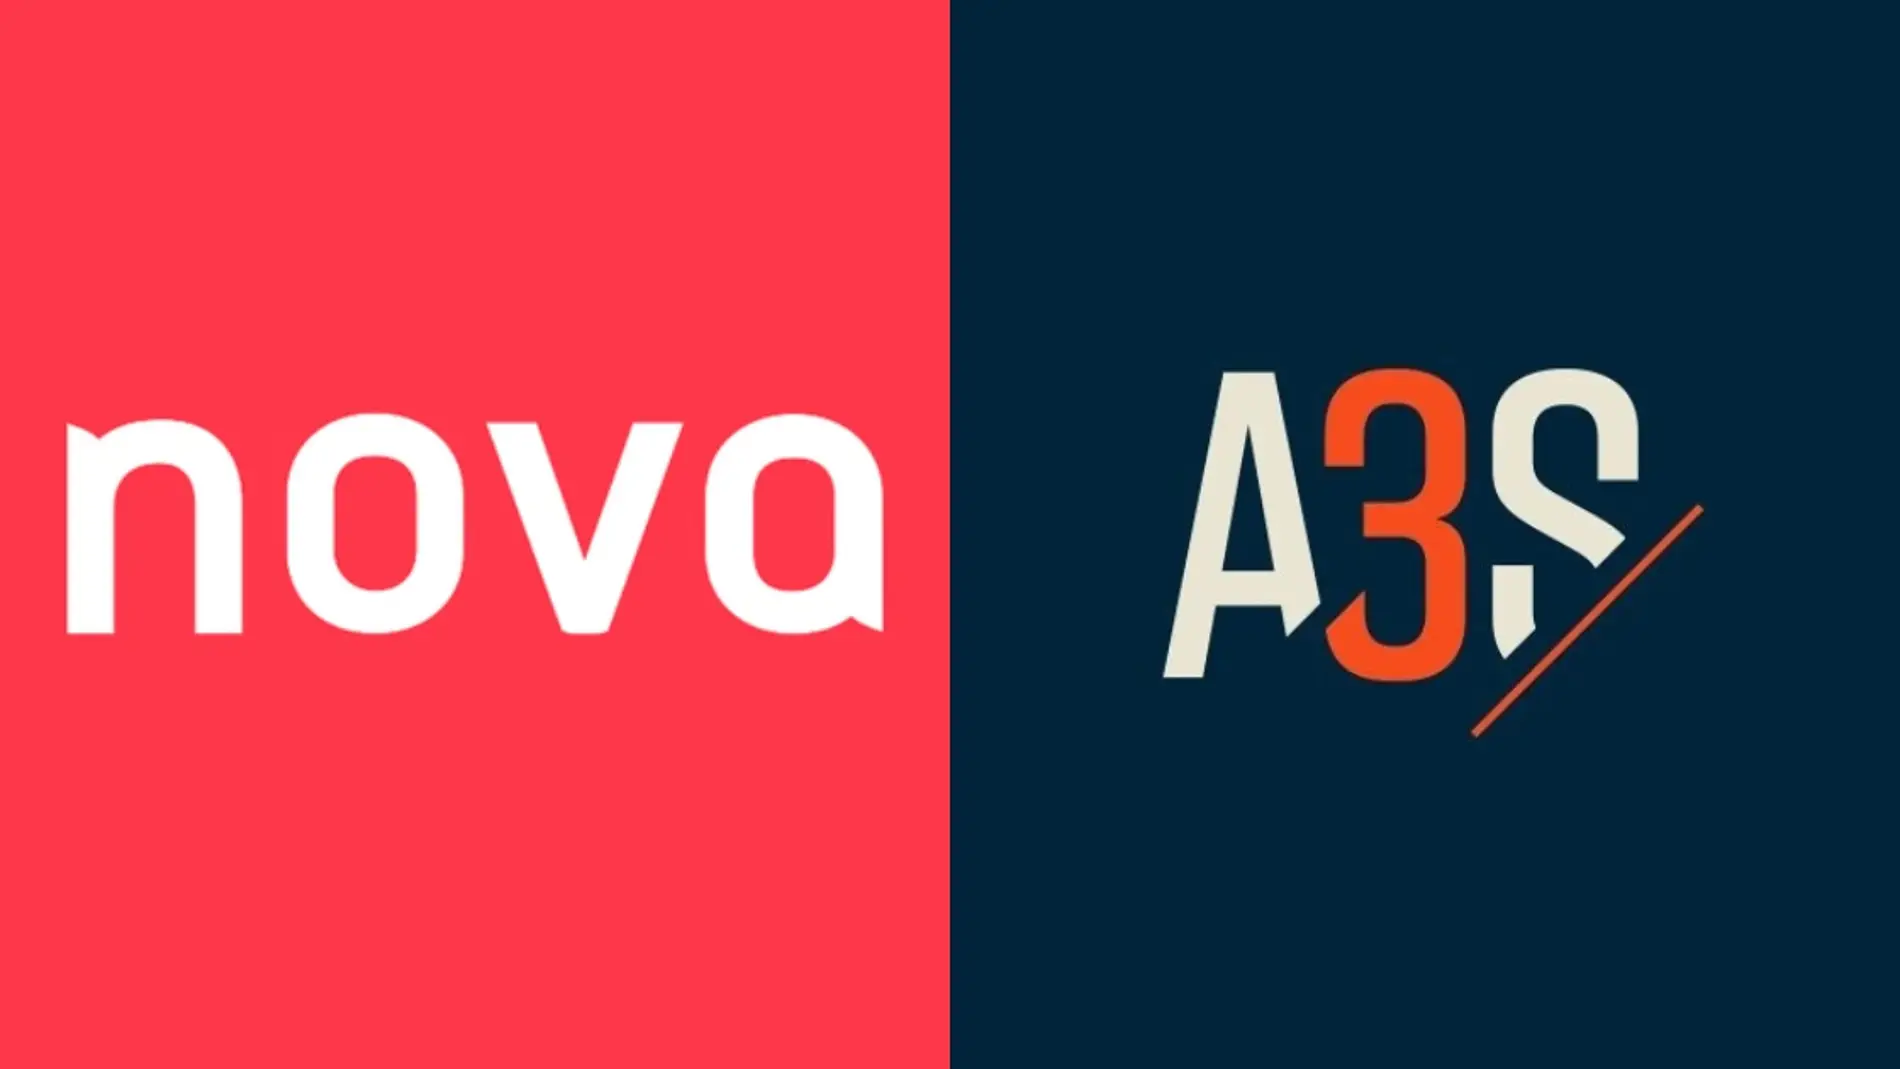 Logo Nova y Atreseries